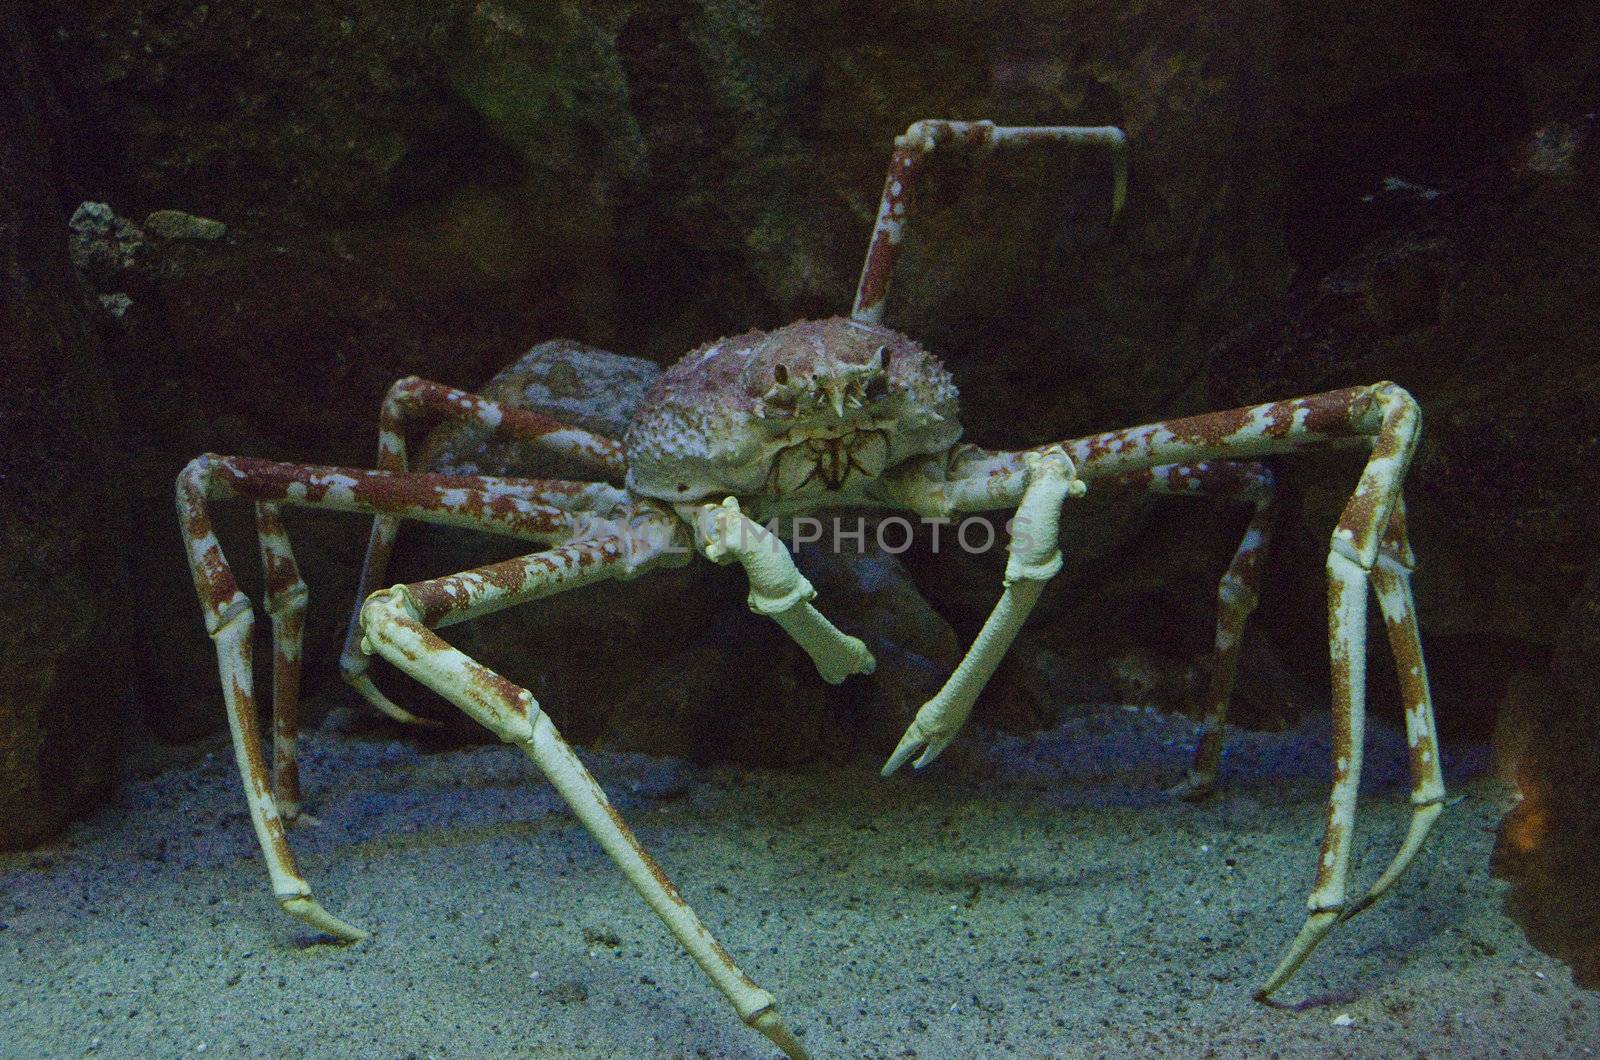 Japanese spider crab by Arrxxx